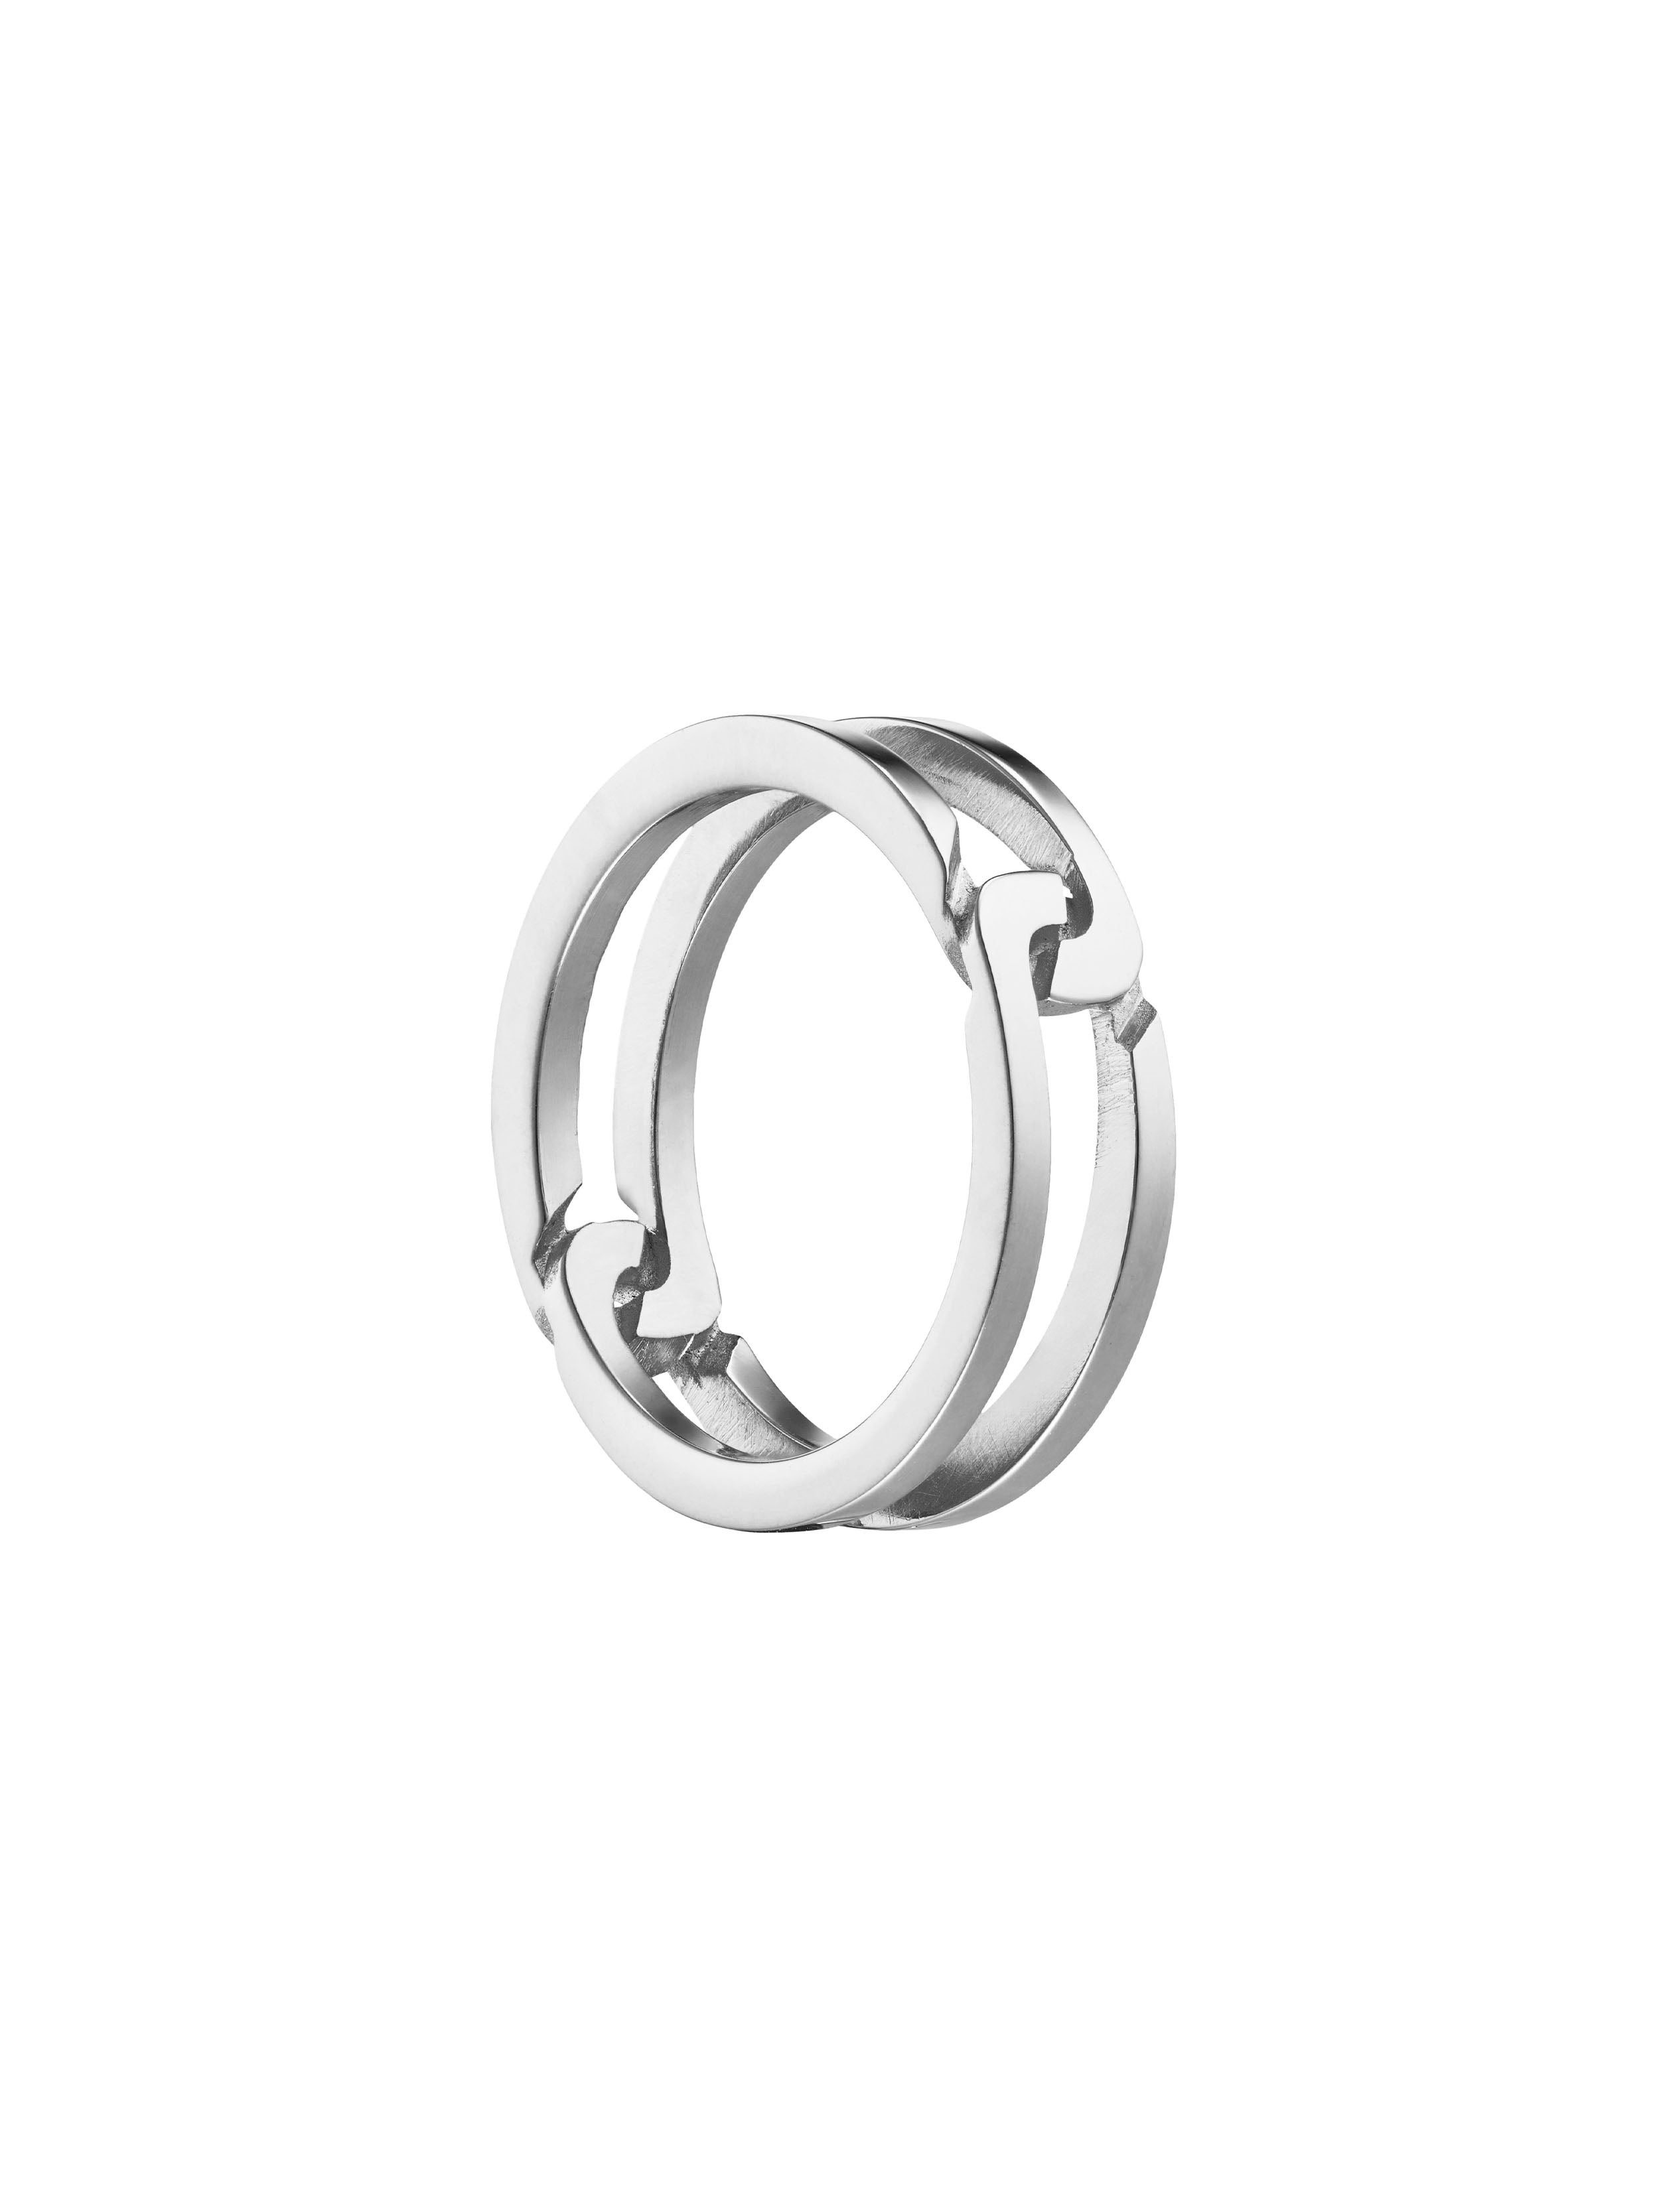 KINRADEN APS BREEZE Ring - sterling silver Rings